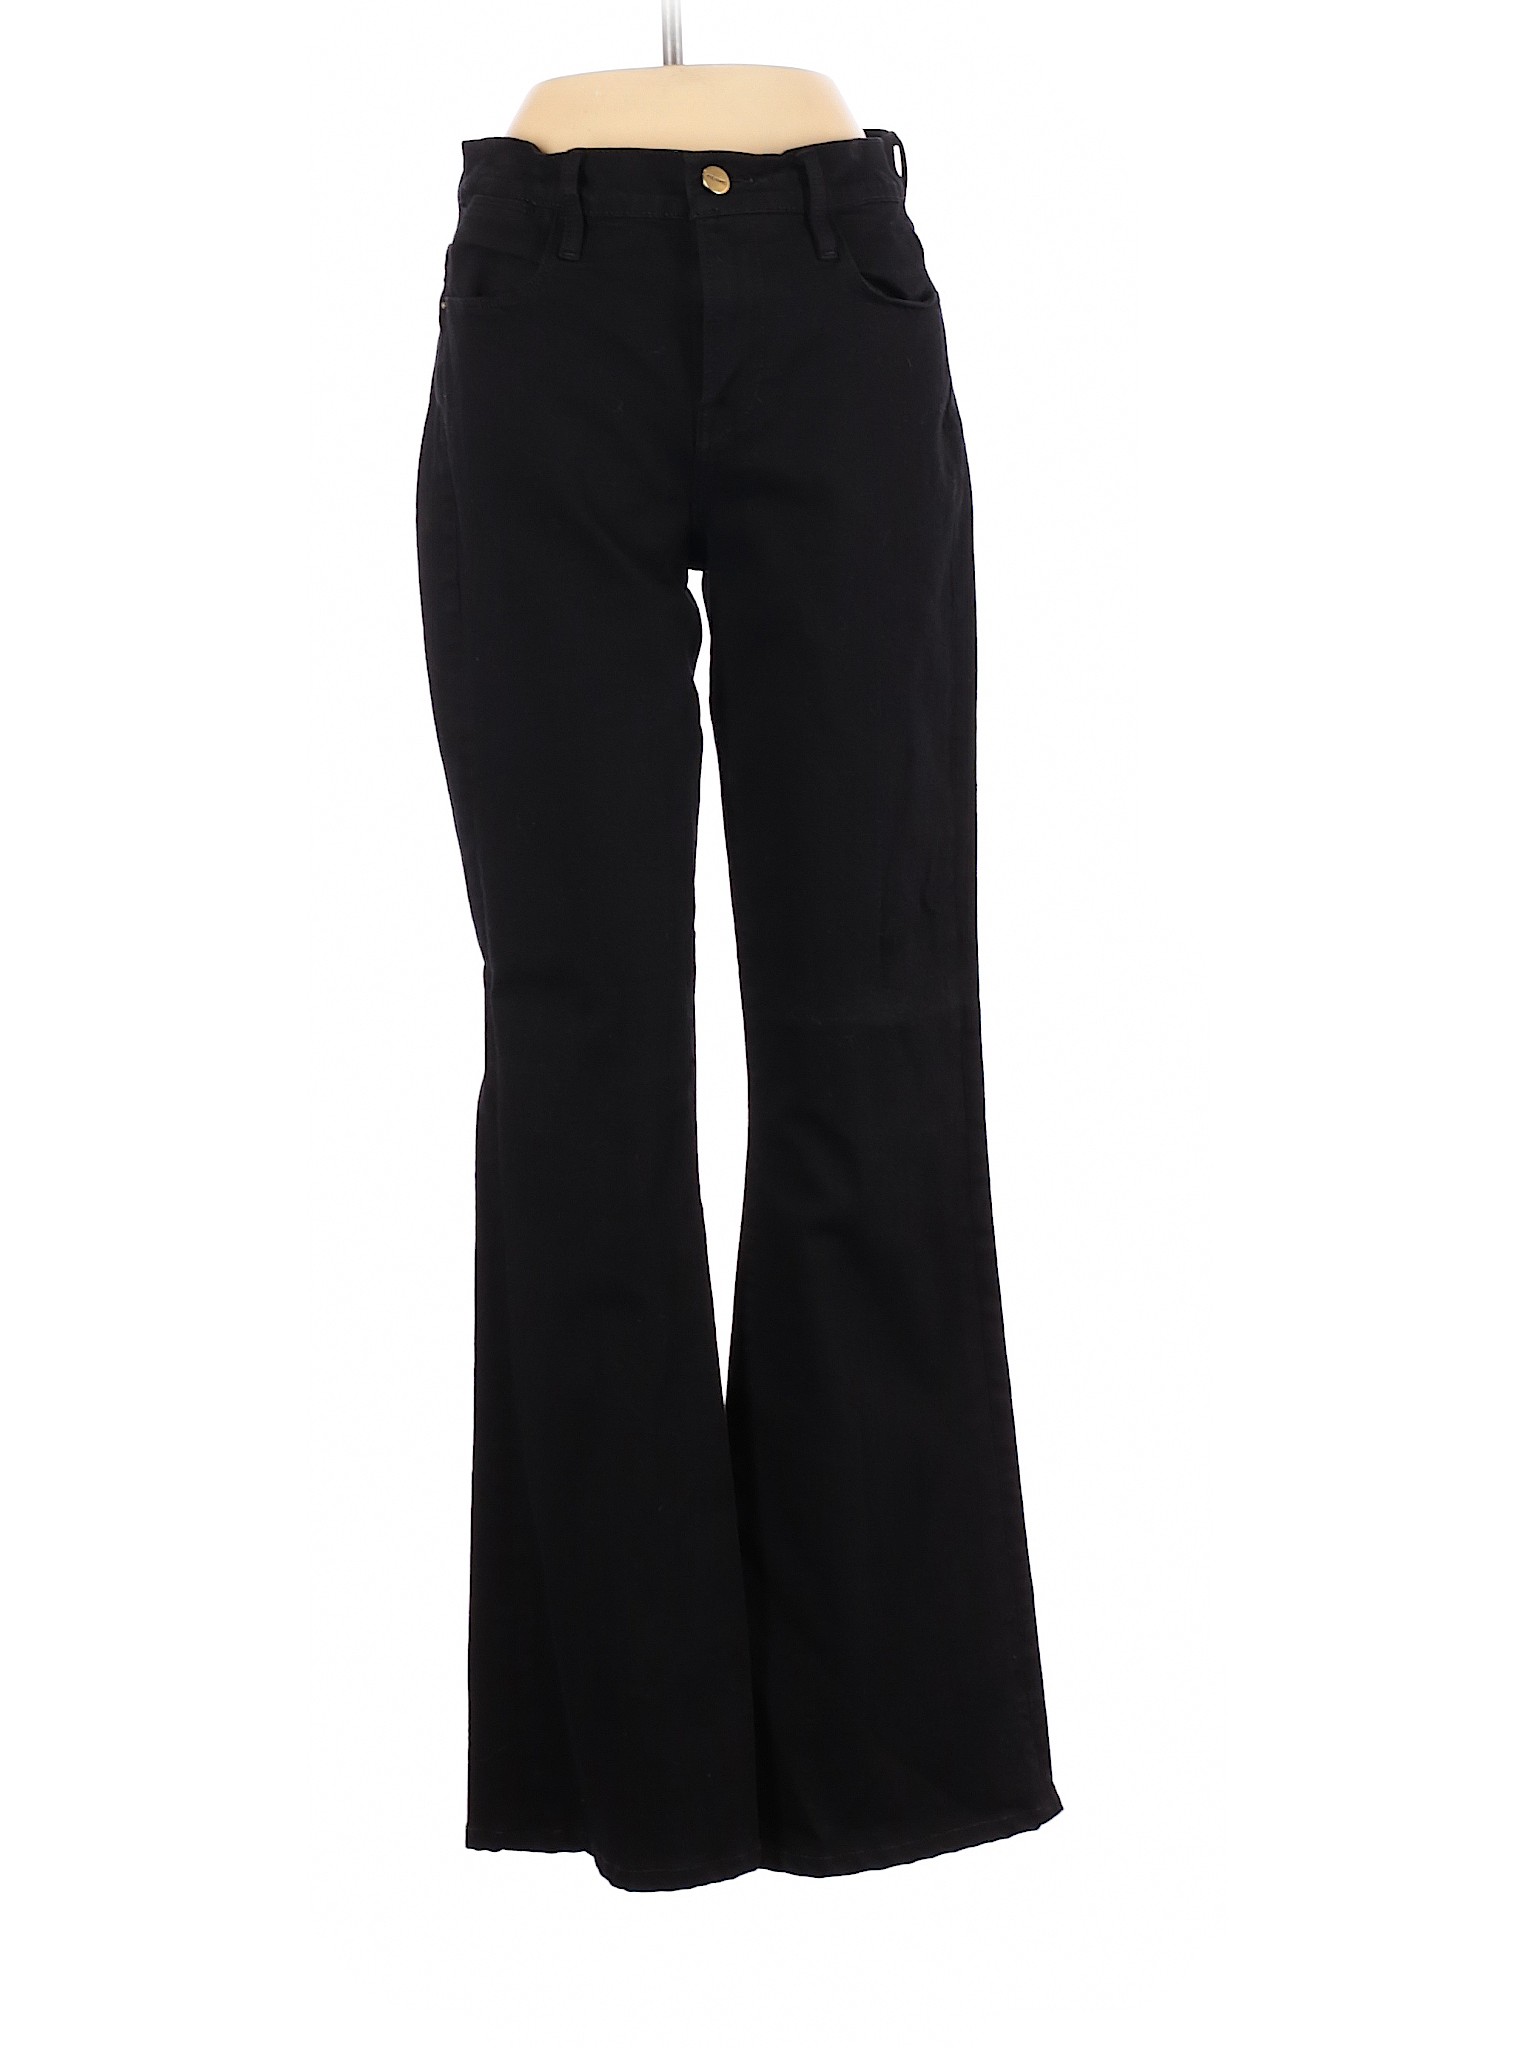 FRAME Denim Women Black Jeans 26W | eBay